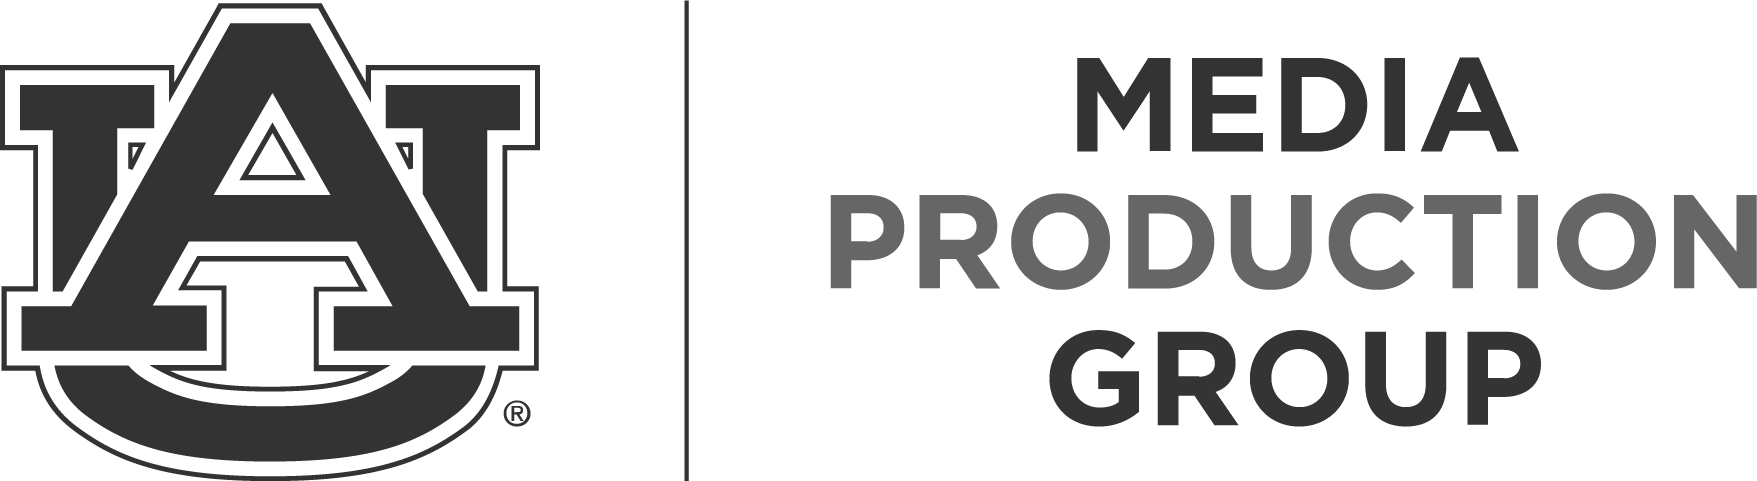 Media Production Group and Auburn Logos